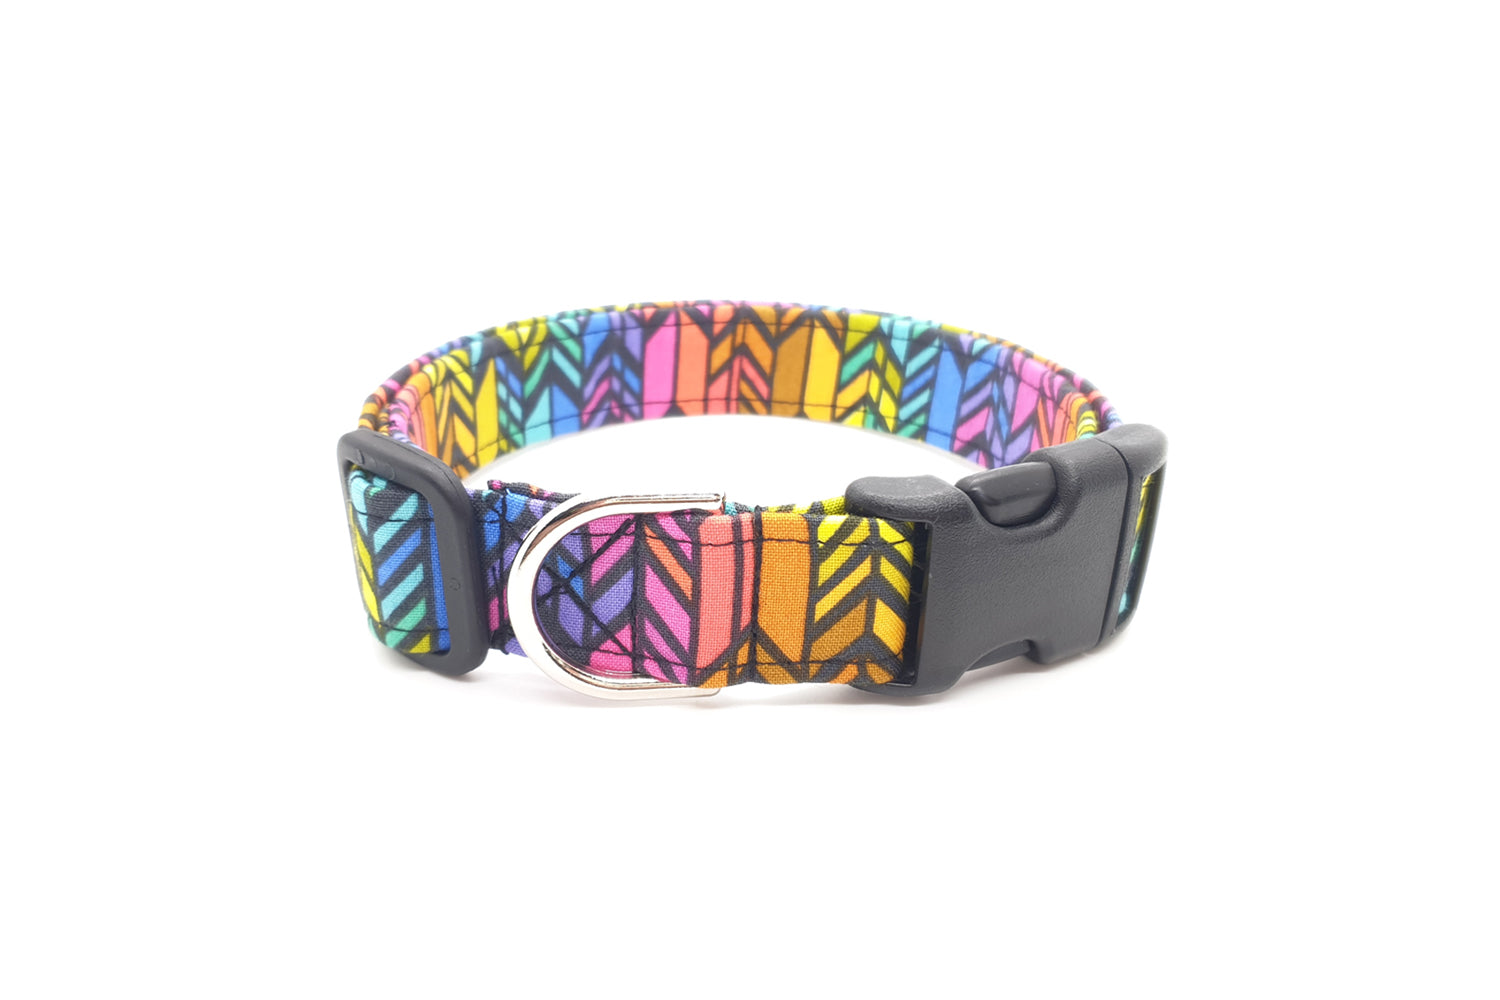 Vertical Rainbow Chevron Dog Collar - Handmade by Kira's Pet Shop